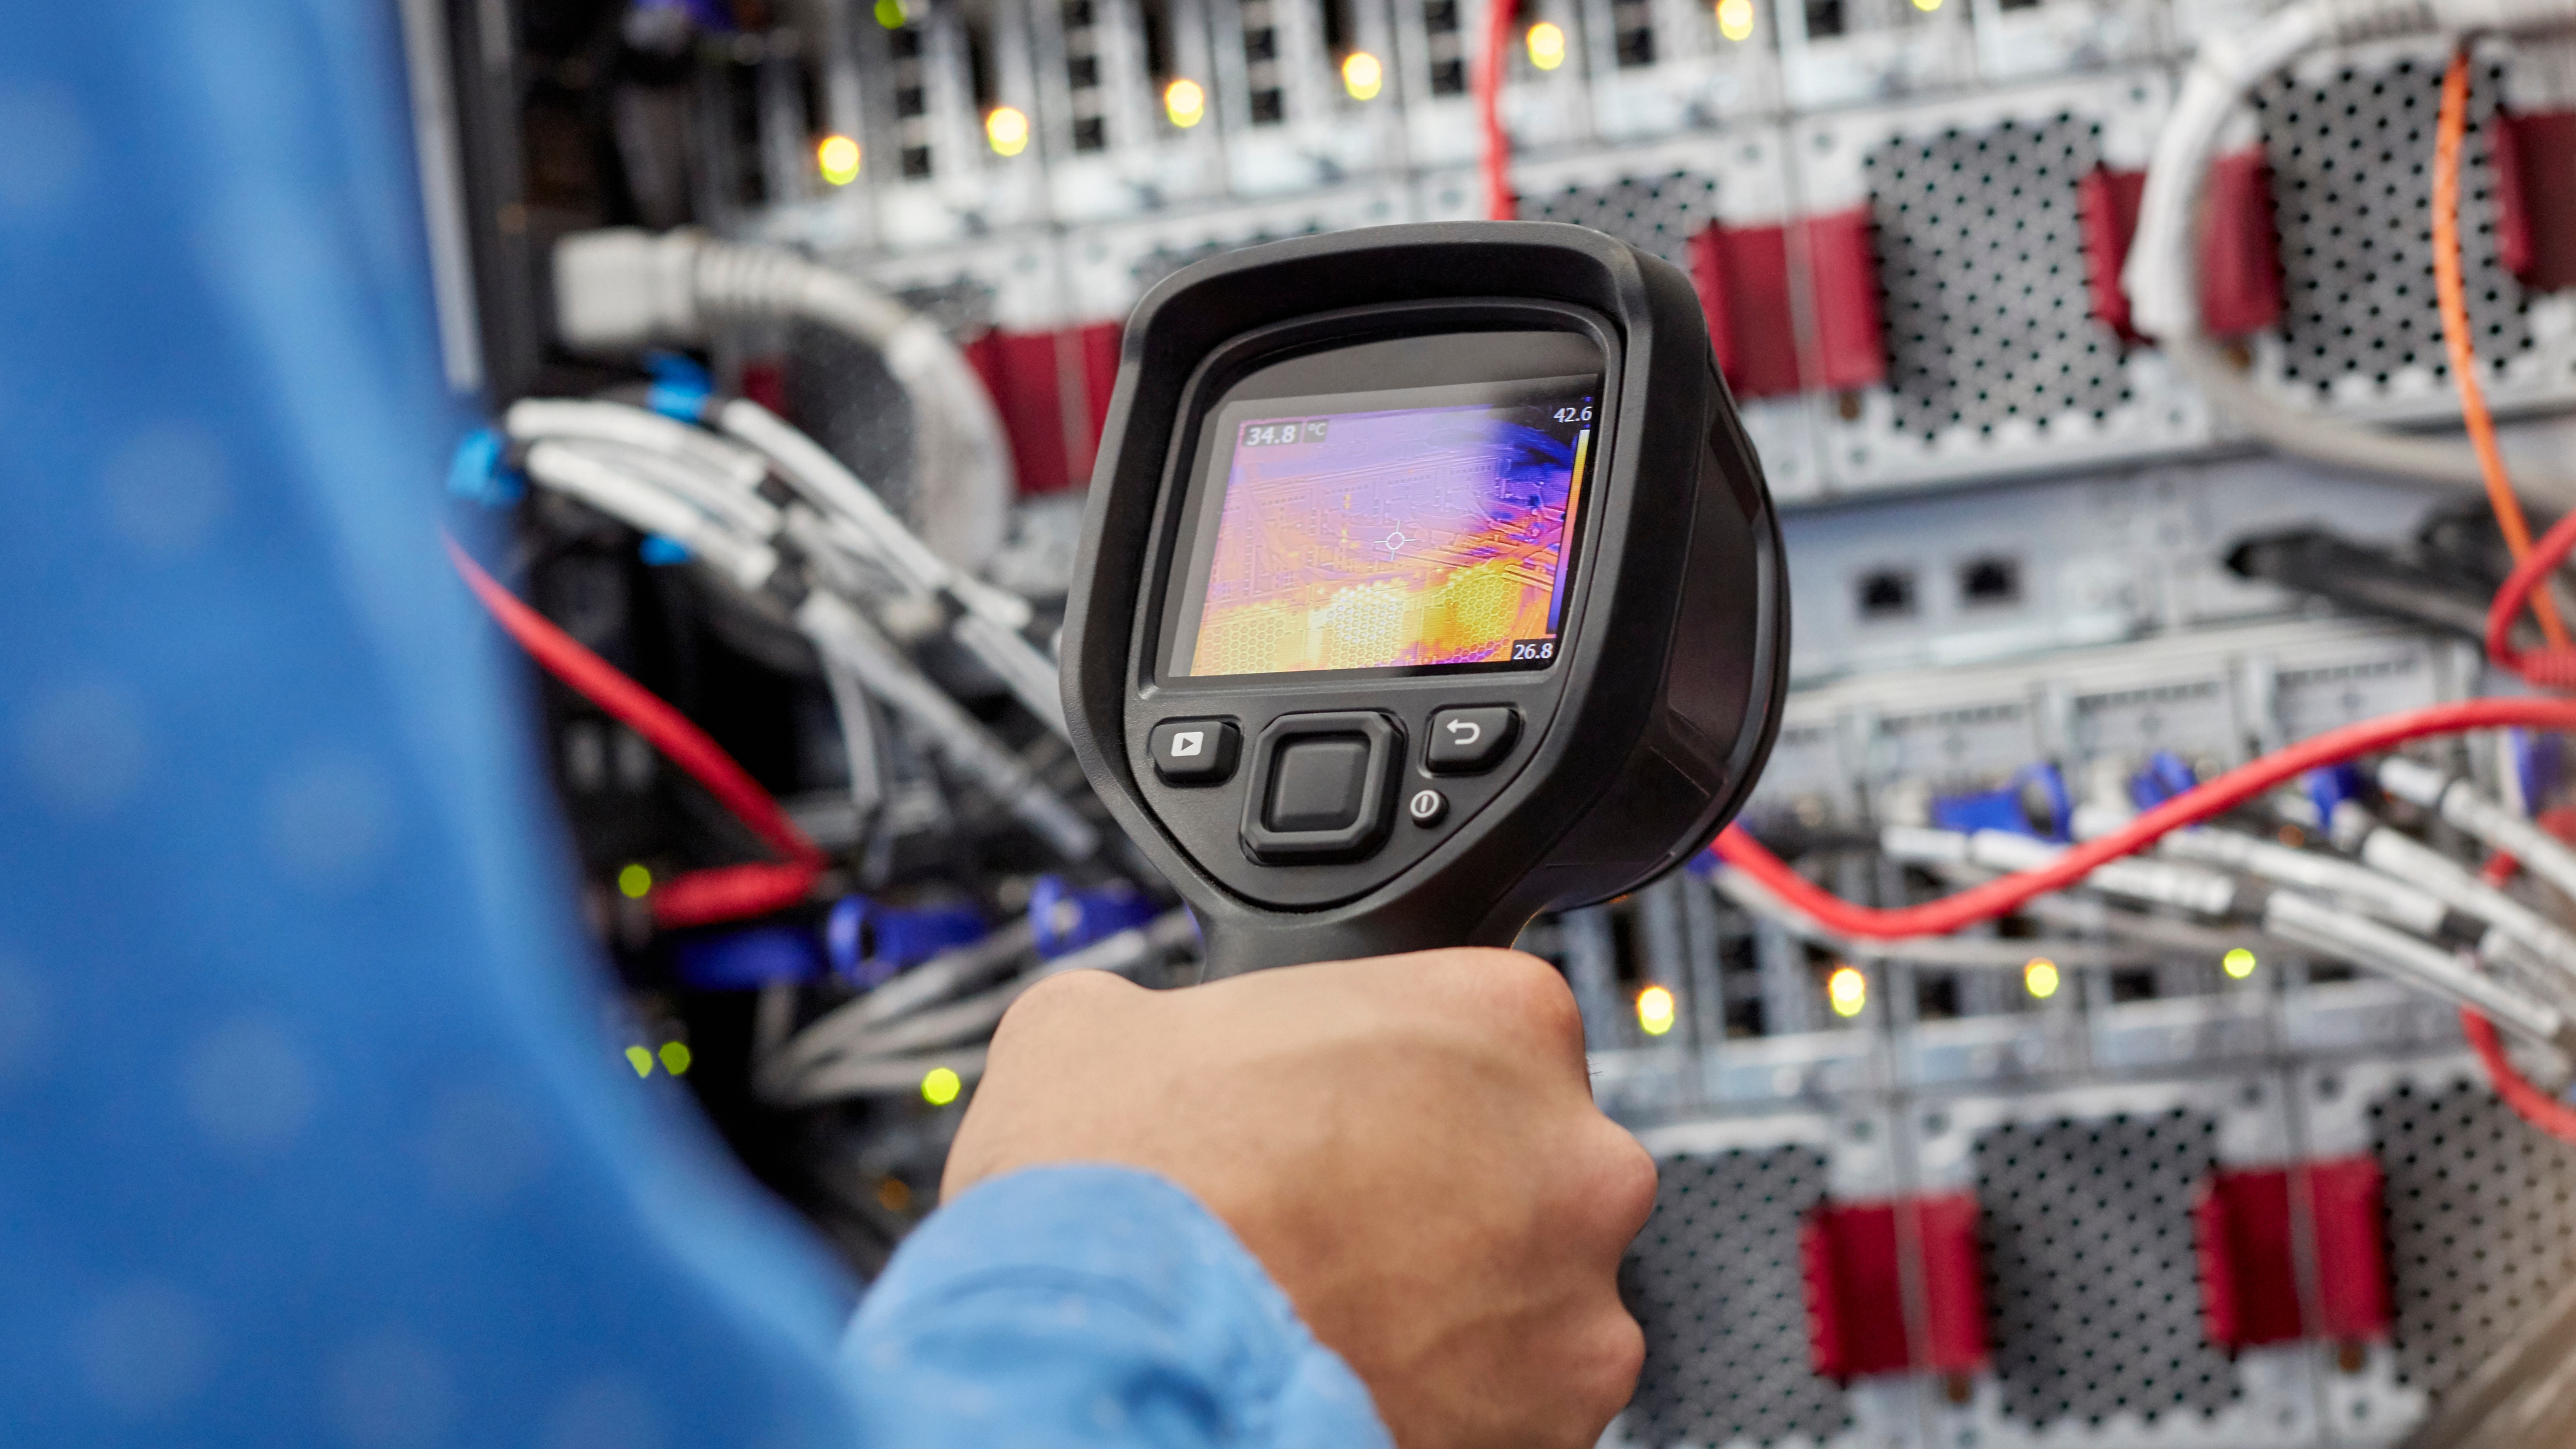 IT technician using diagnostic thermal imagining camera equipment in server room